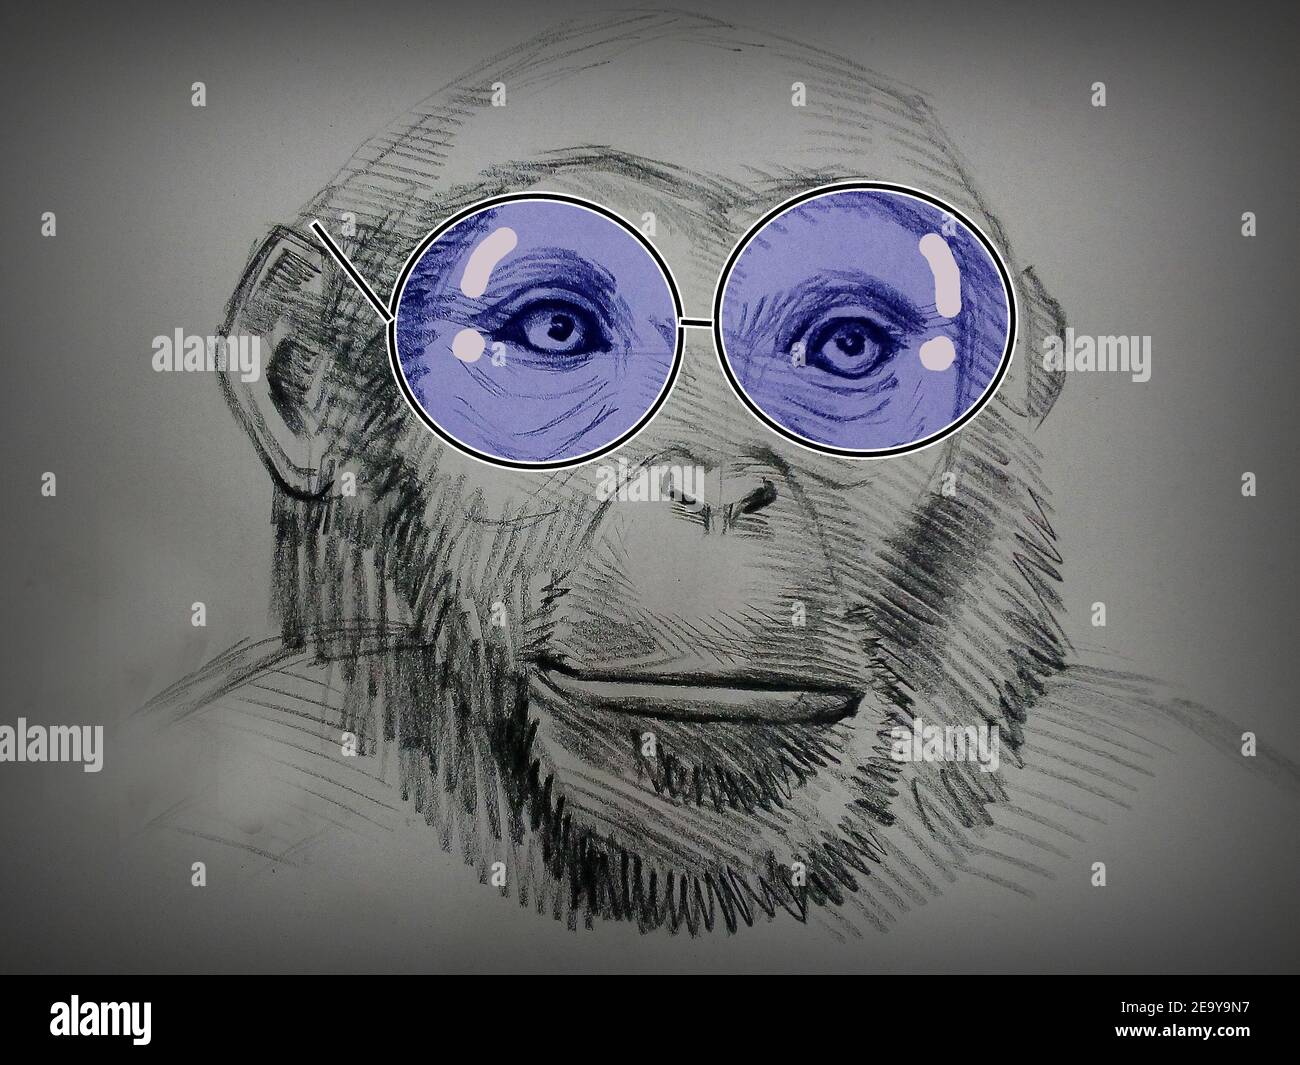 17,706 Monkey Sketch Images, Stock Photos & Vectors | Shutterstock